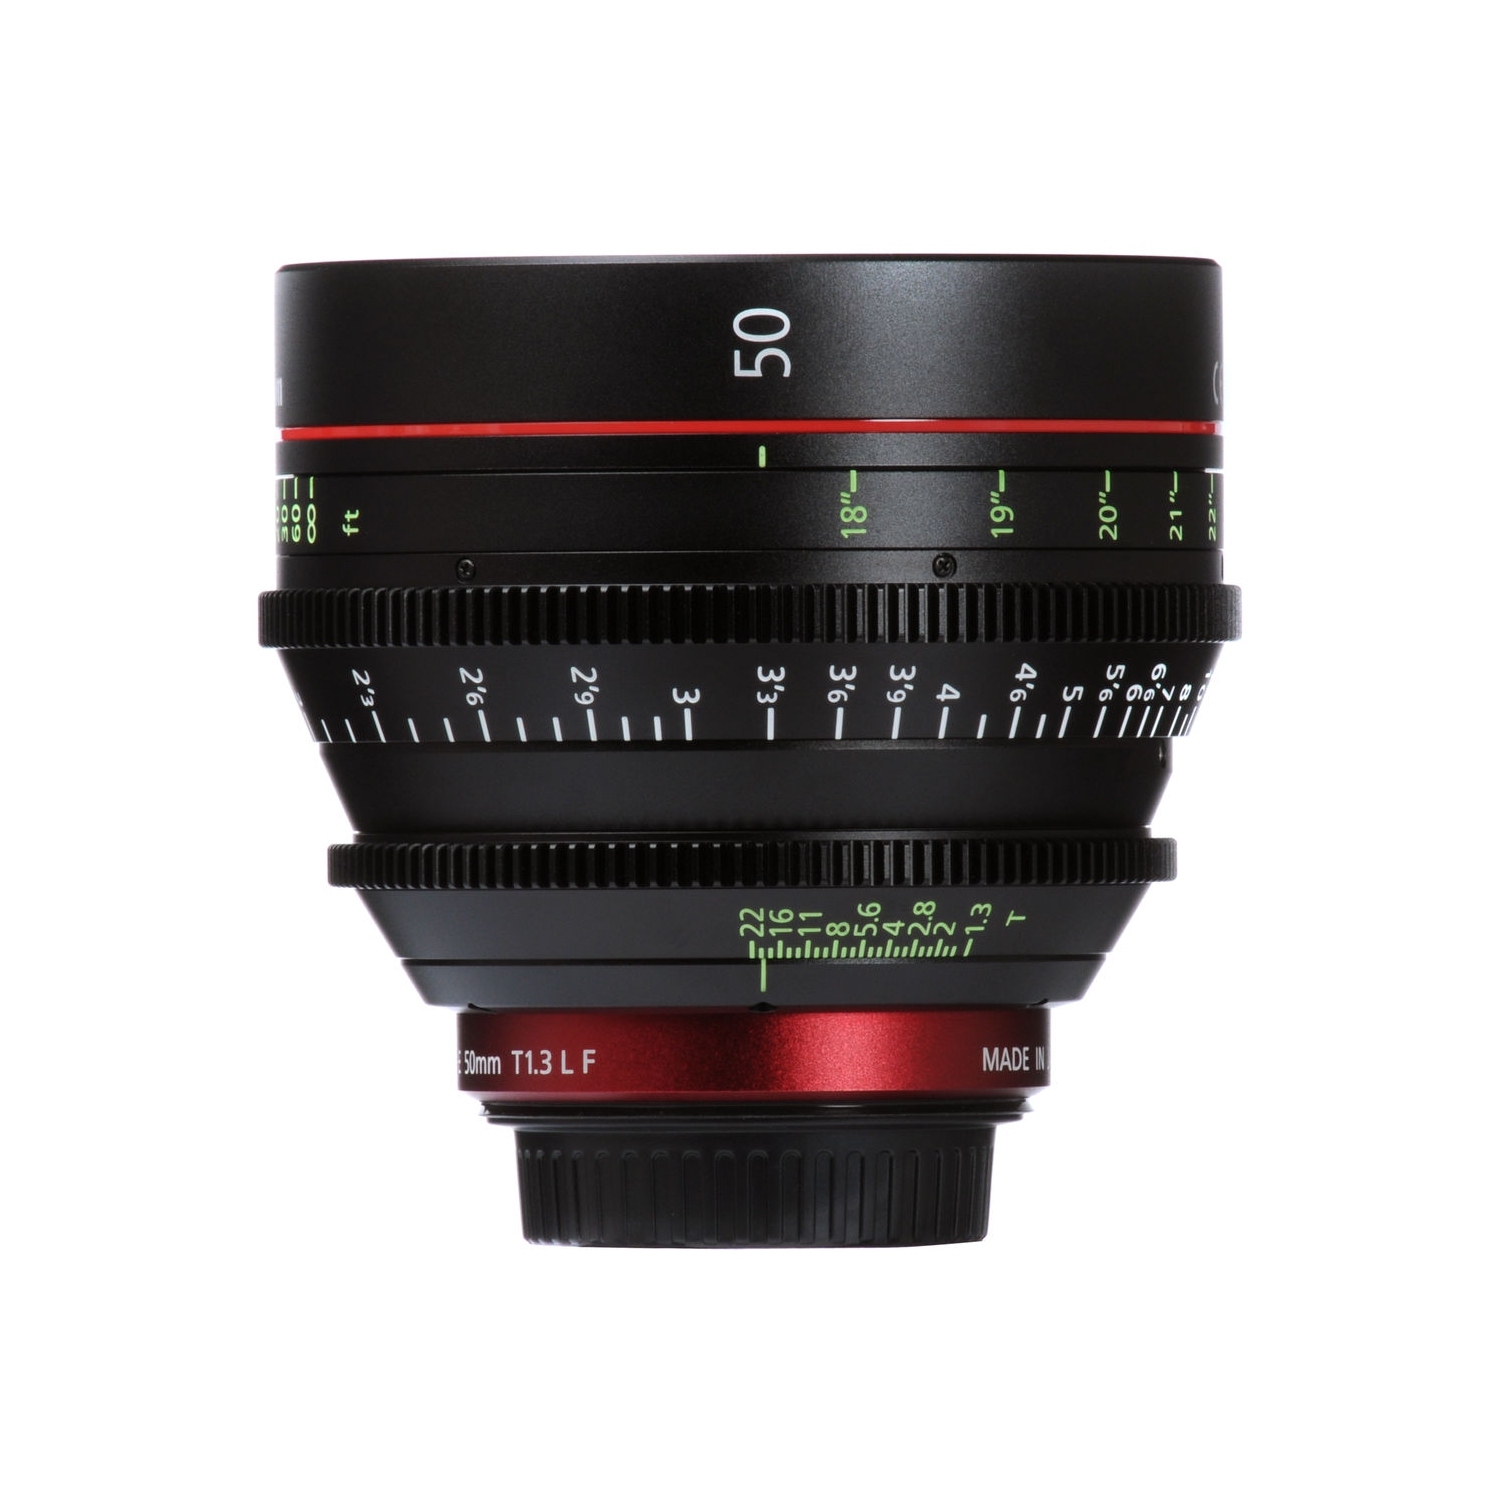 Canon CN-E 50mm T1.3 L F Cine Lens (6570B001) + Lens Pouch + Cap Keeper +  More